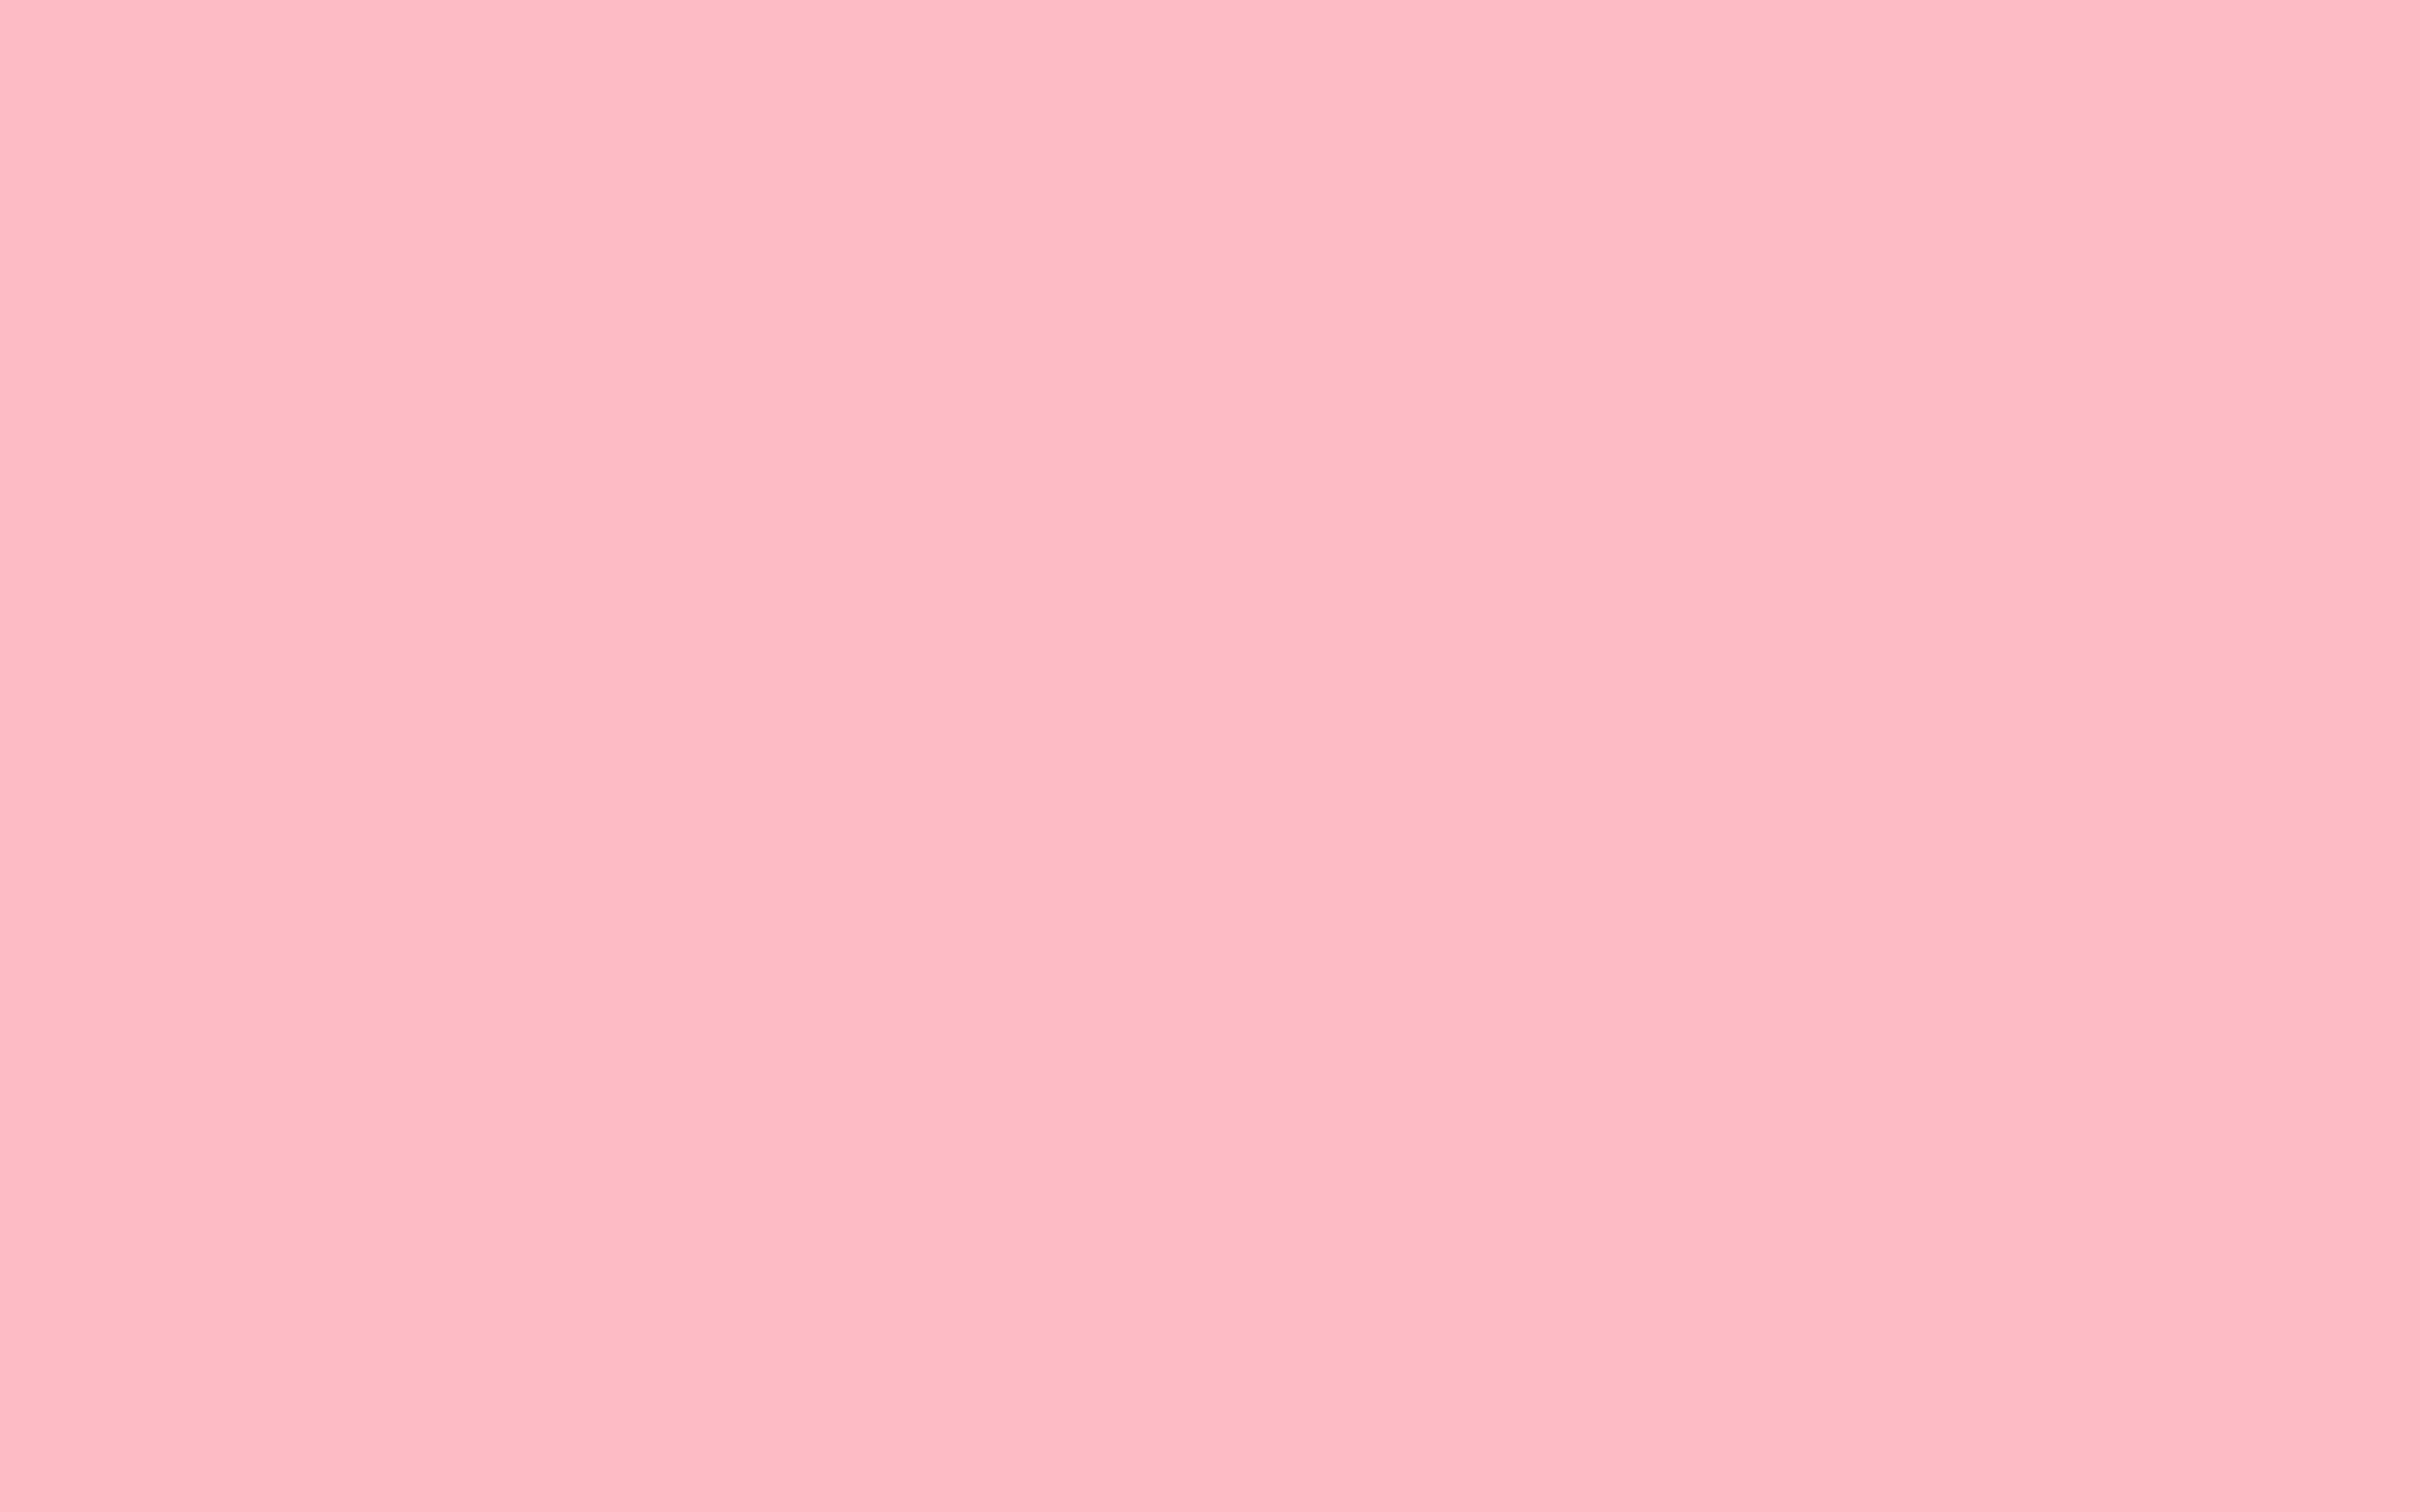 Awesome Plain Pink Wallpapercameronscookware.com